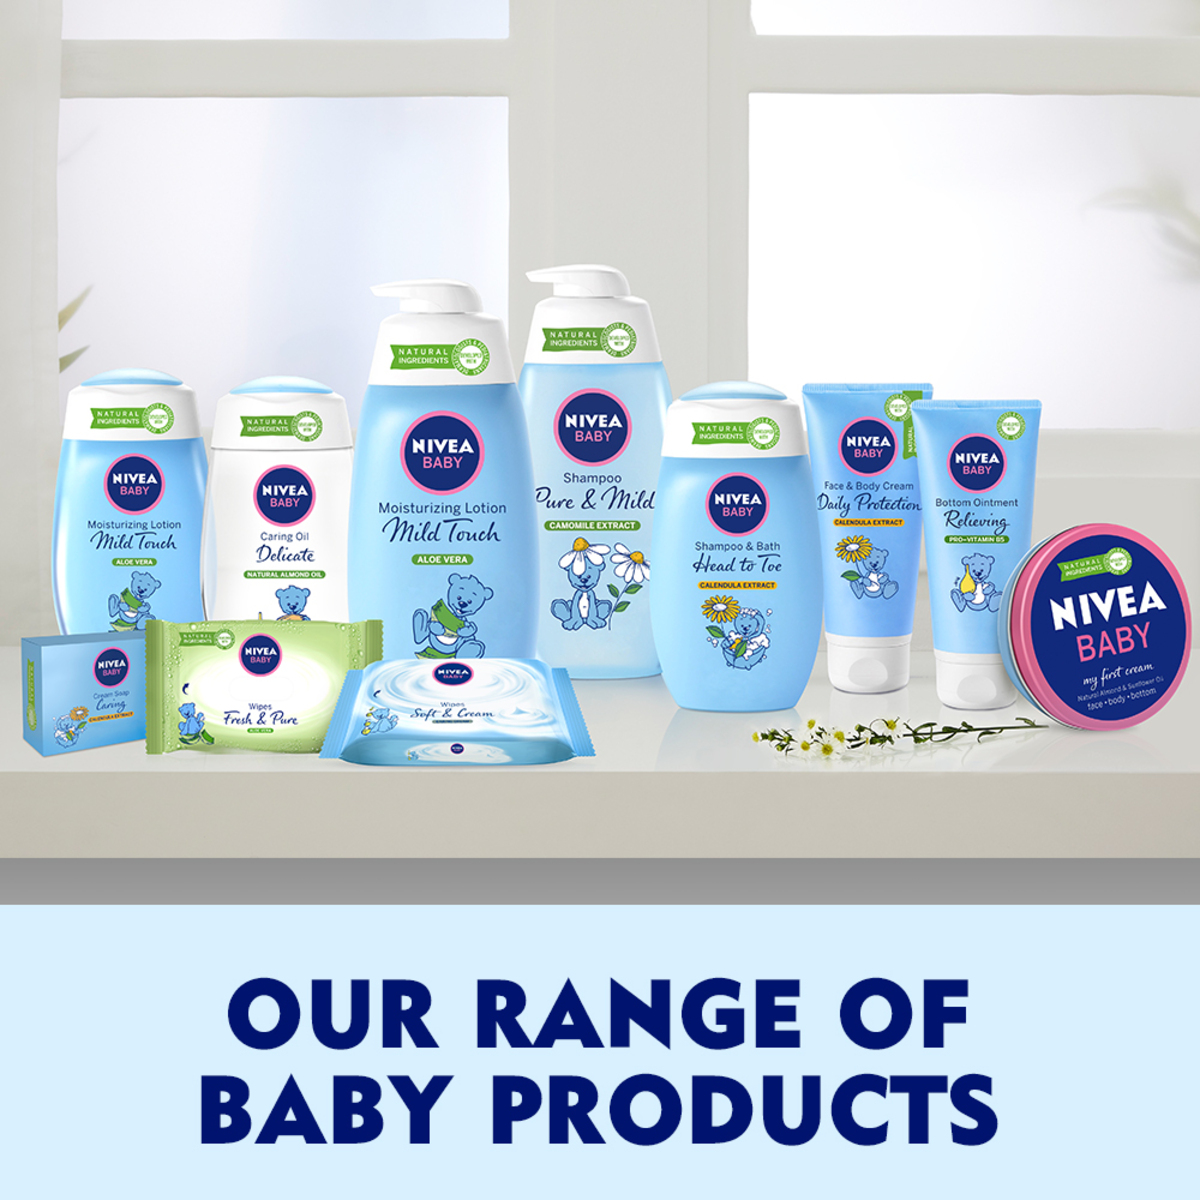 Nivea Baby Bath Shampoo Head To Toe Calendula Extract 200 ml